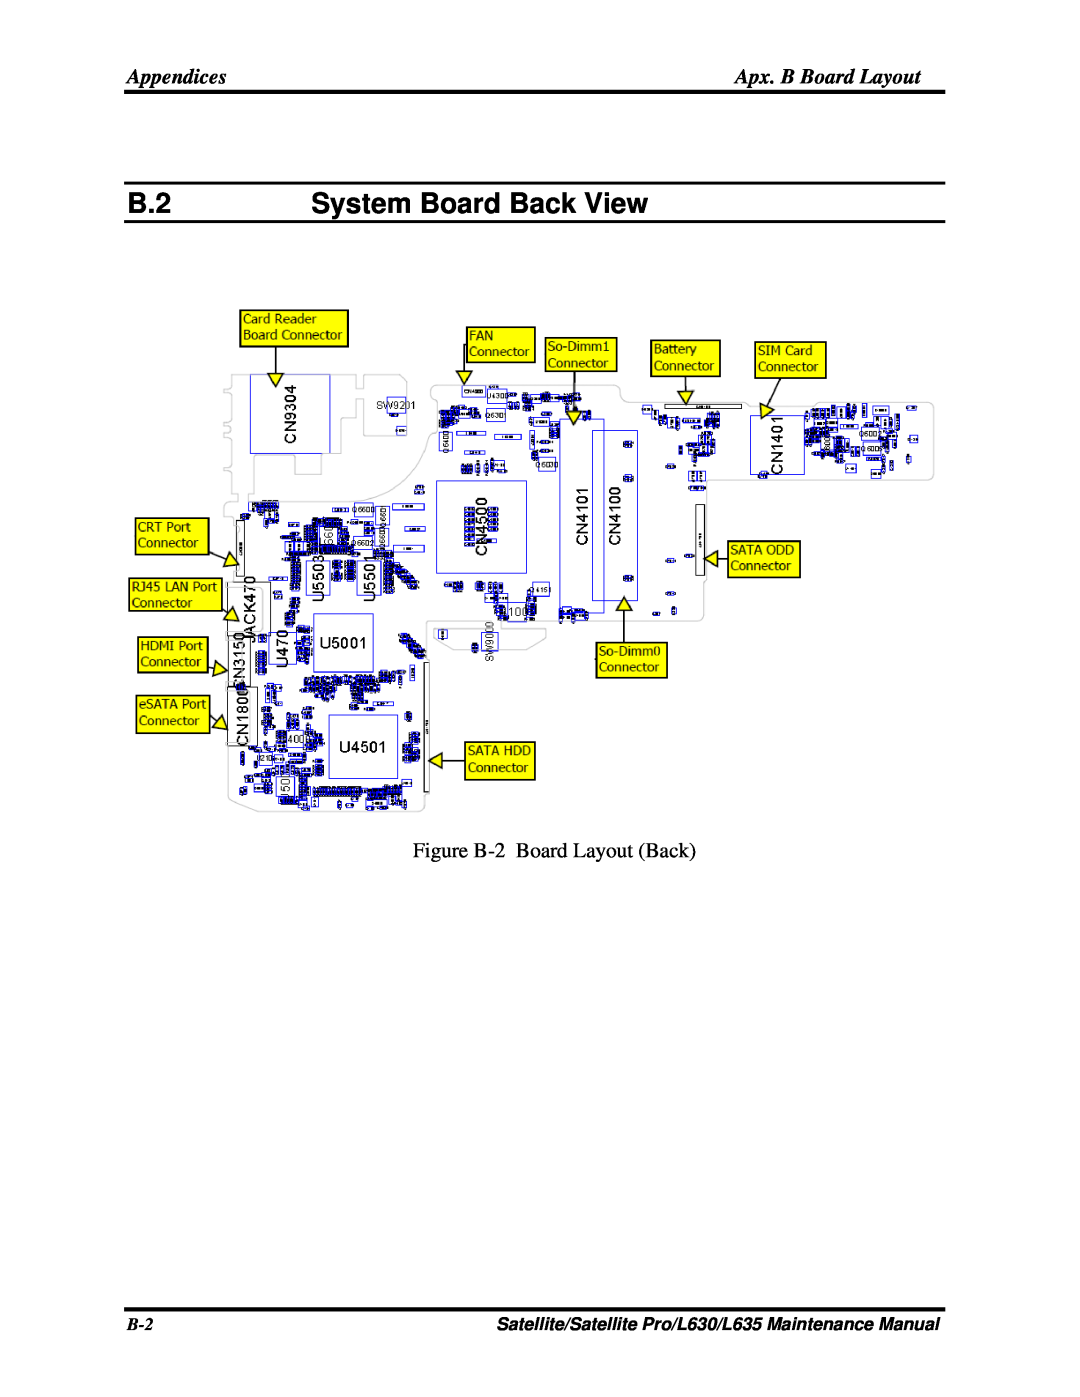 Toshiba System Board Back View, Figure B-2 Board Layout Back, Satellite/Satellite Pro/L630/L635 Maintenance Manual 